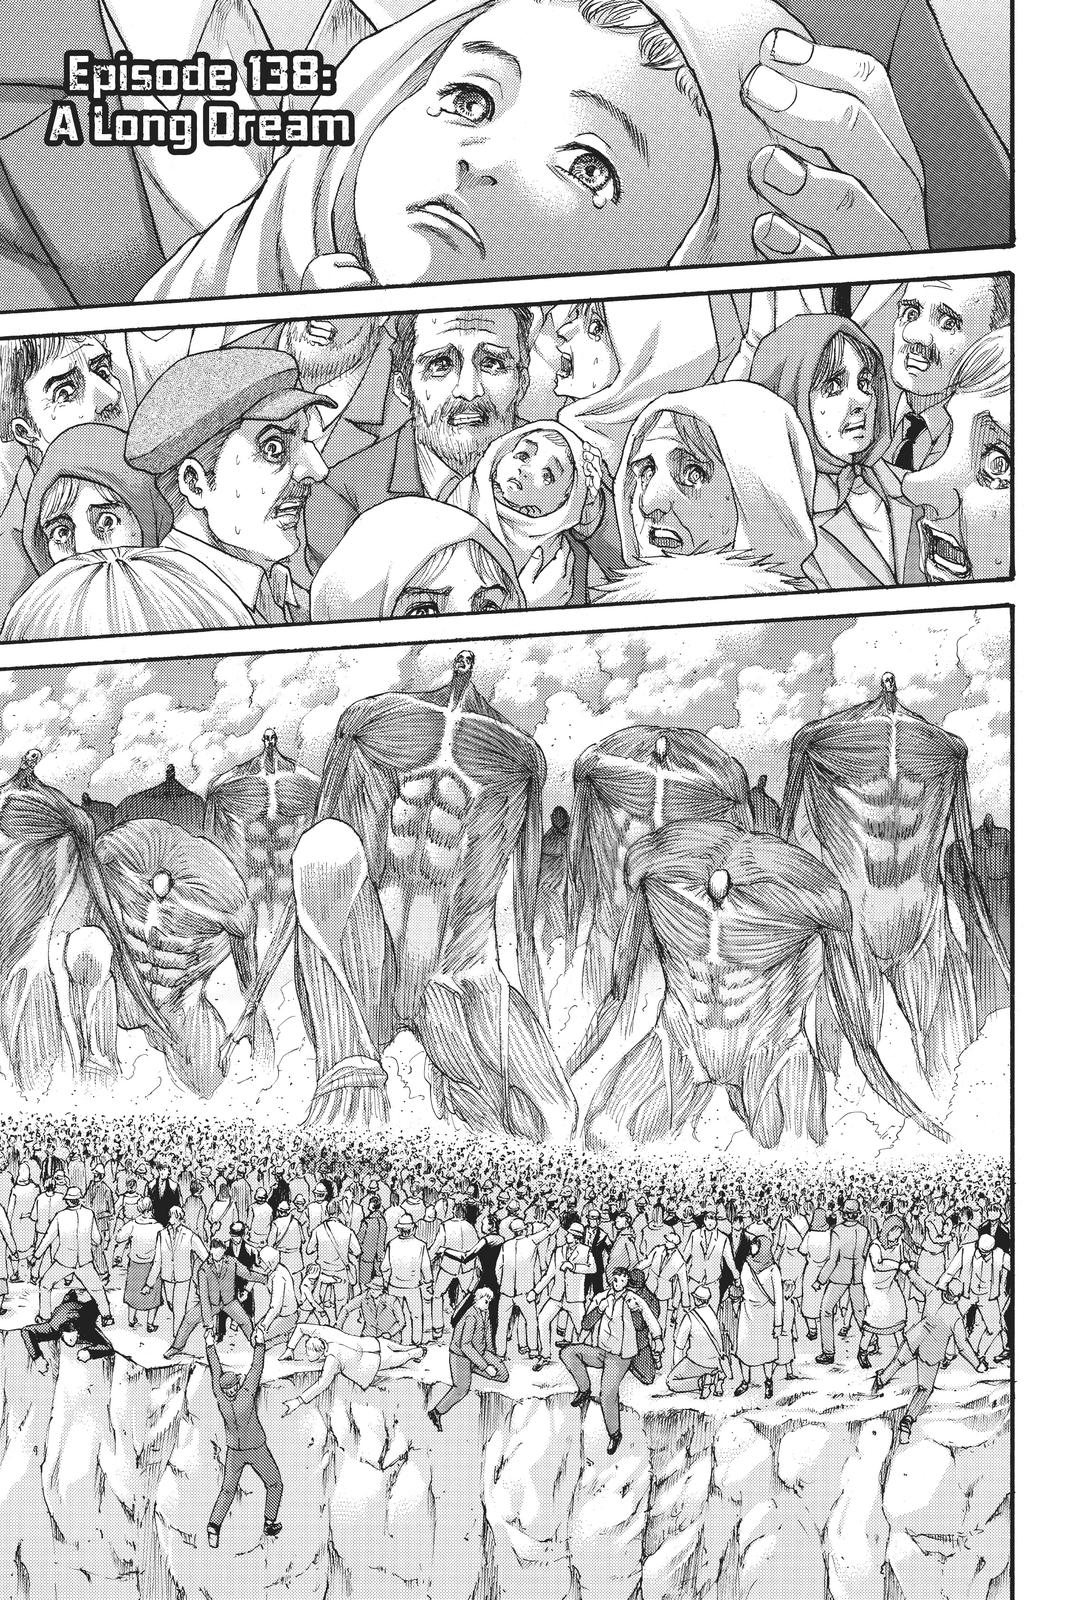 Shingeki No Kyojin, chapter 49 - Attack On Titan Manga Online